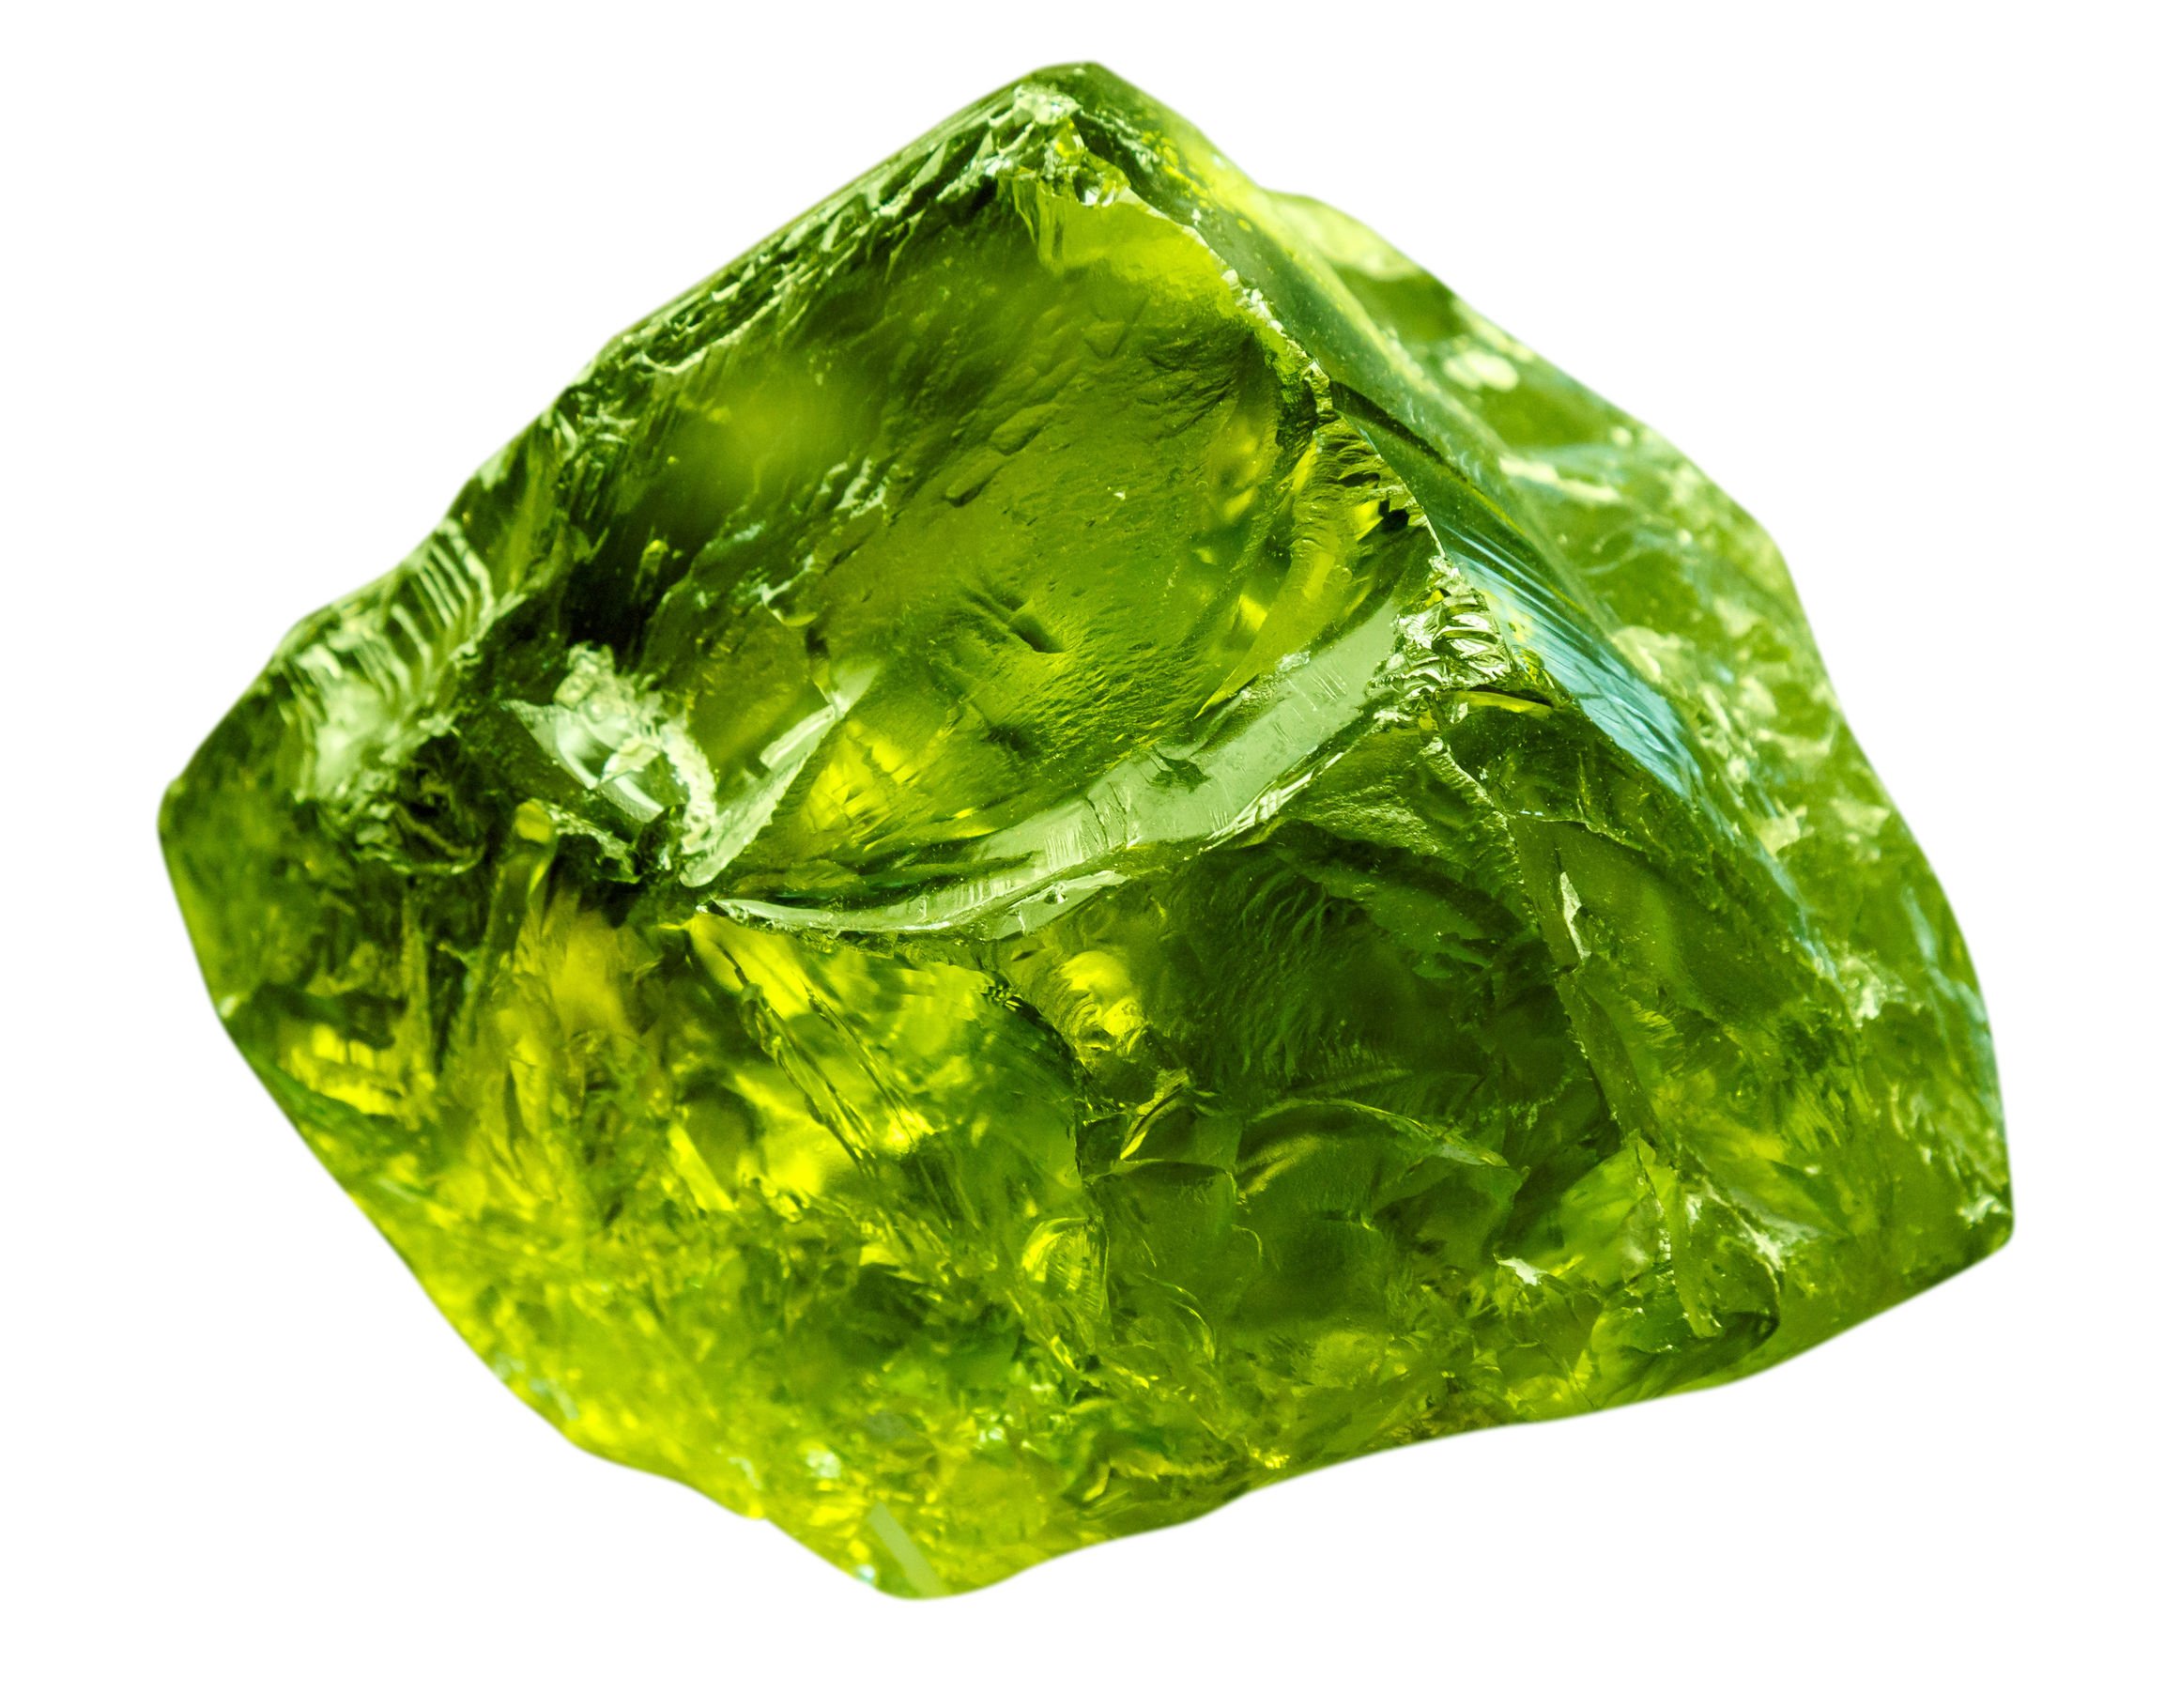 Emerald gem stone mineral. Green gemstone of precious rock isolated on white background. Transparent shiny raw brilliant gem